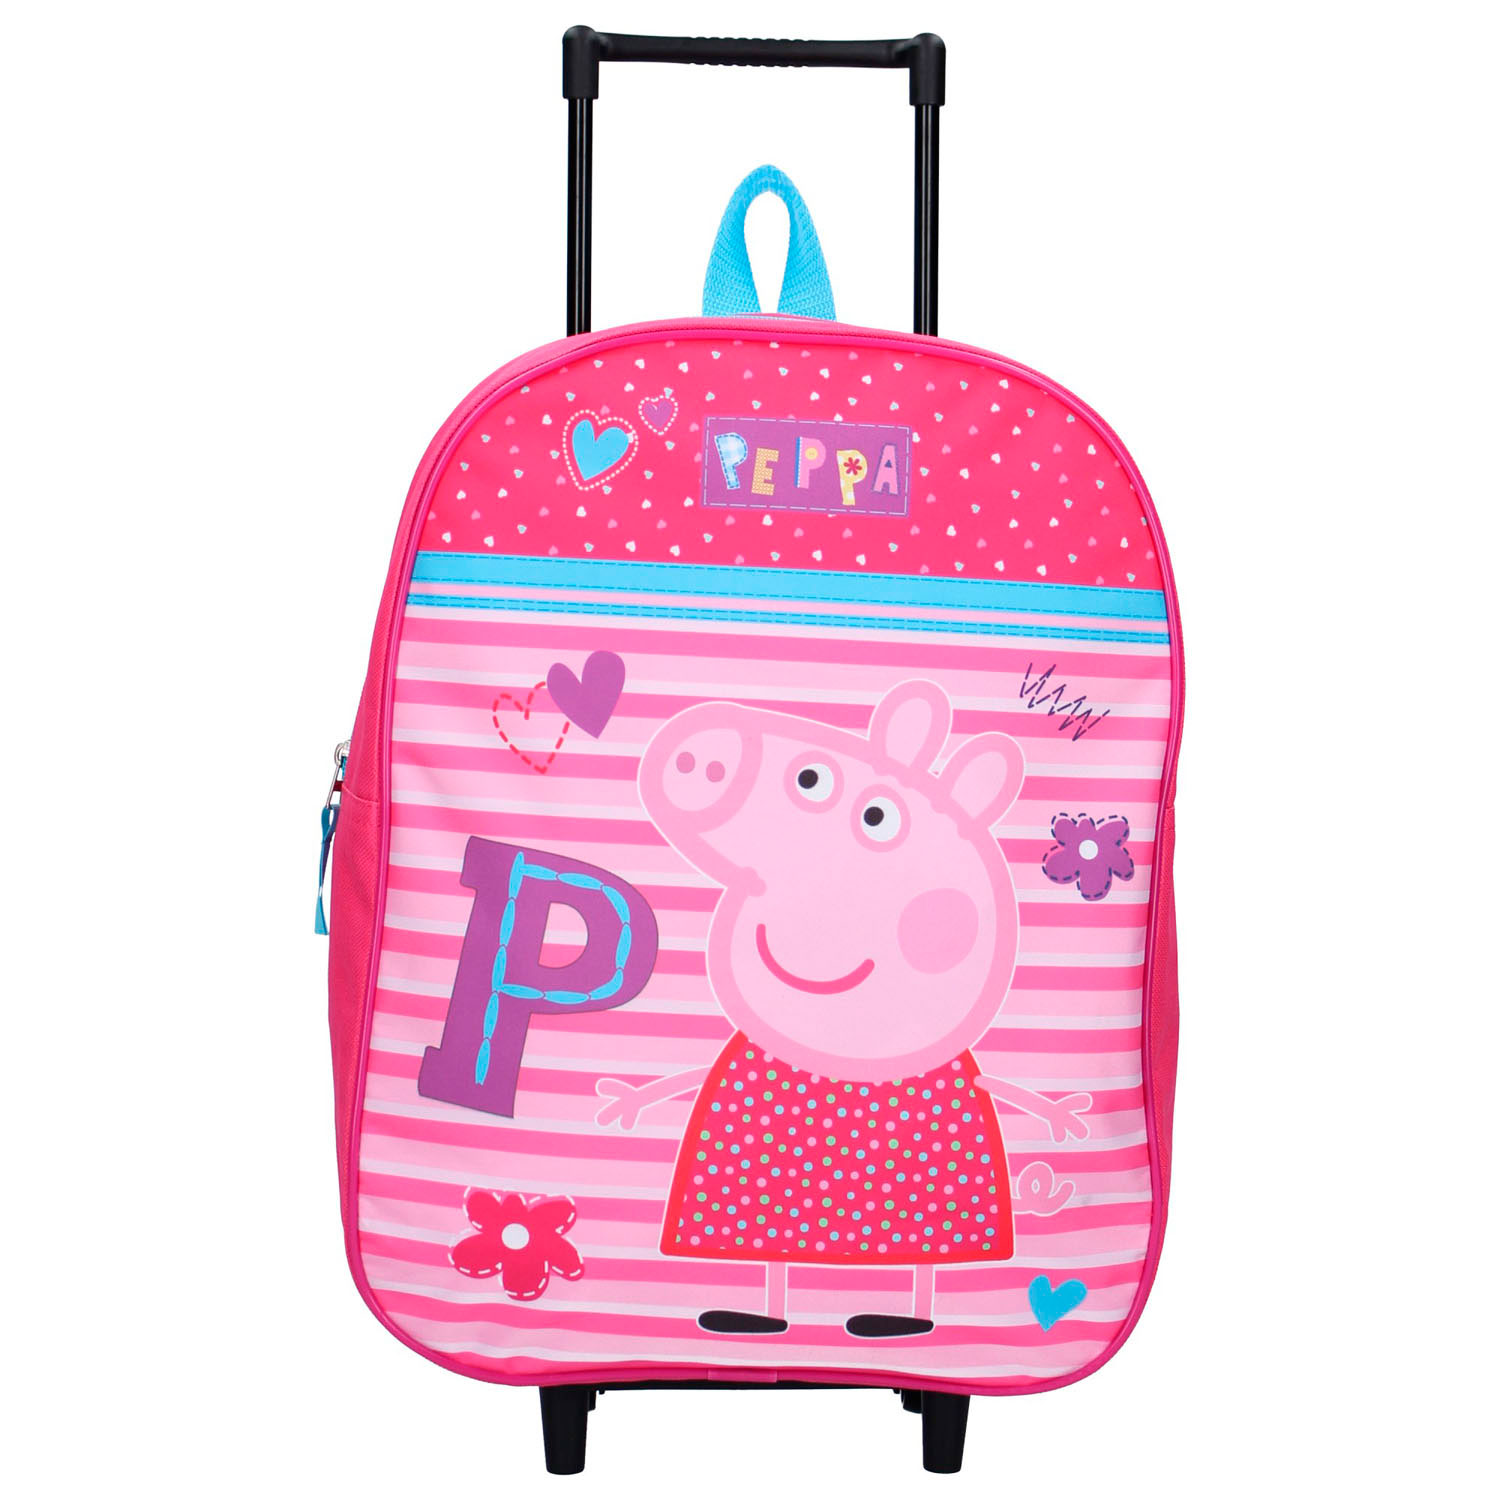 Peppa Pig Trolley